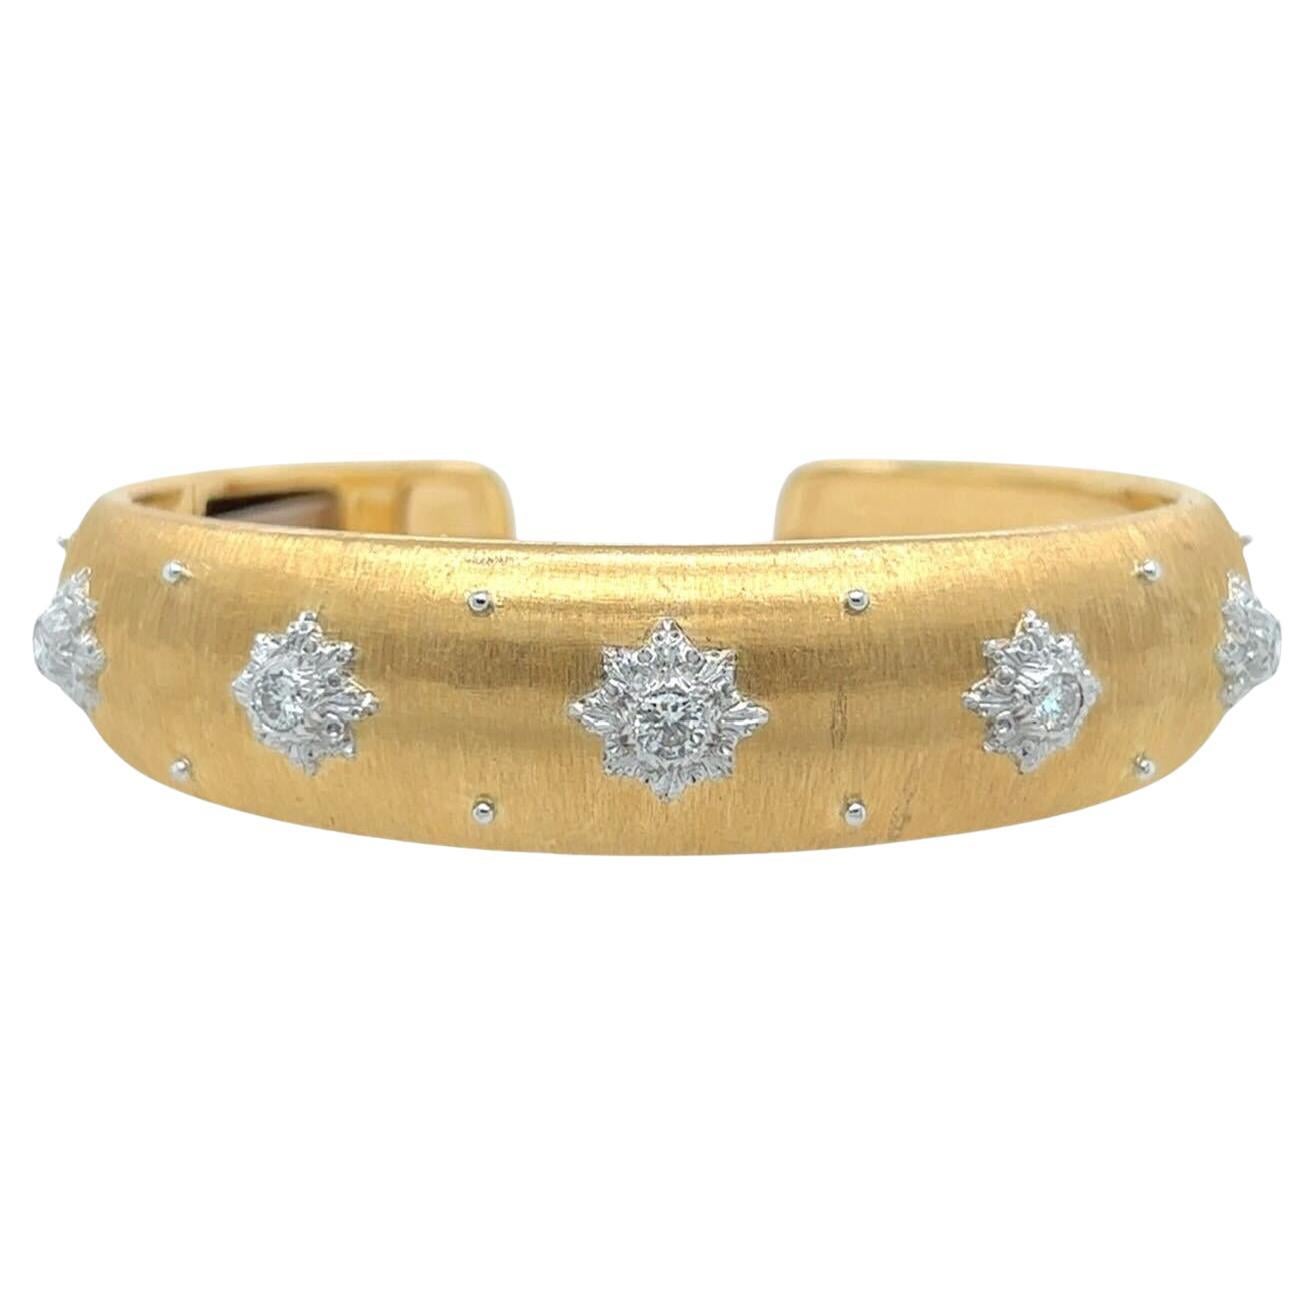 BUCCELLATI Yellow and White Gold and Diamond Cuff Bracelet